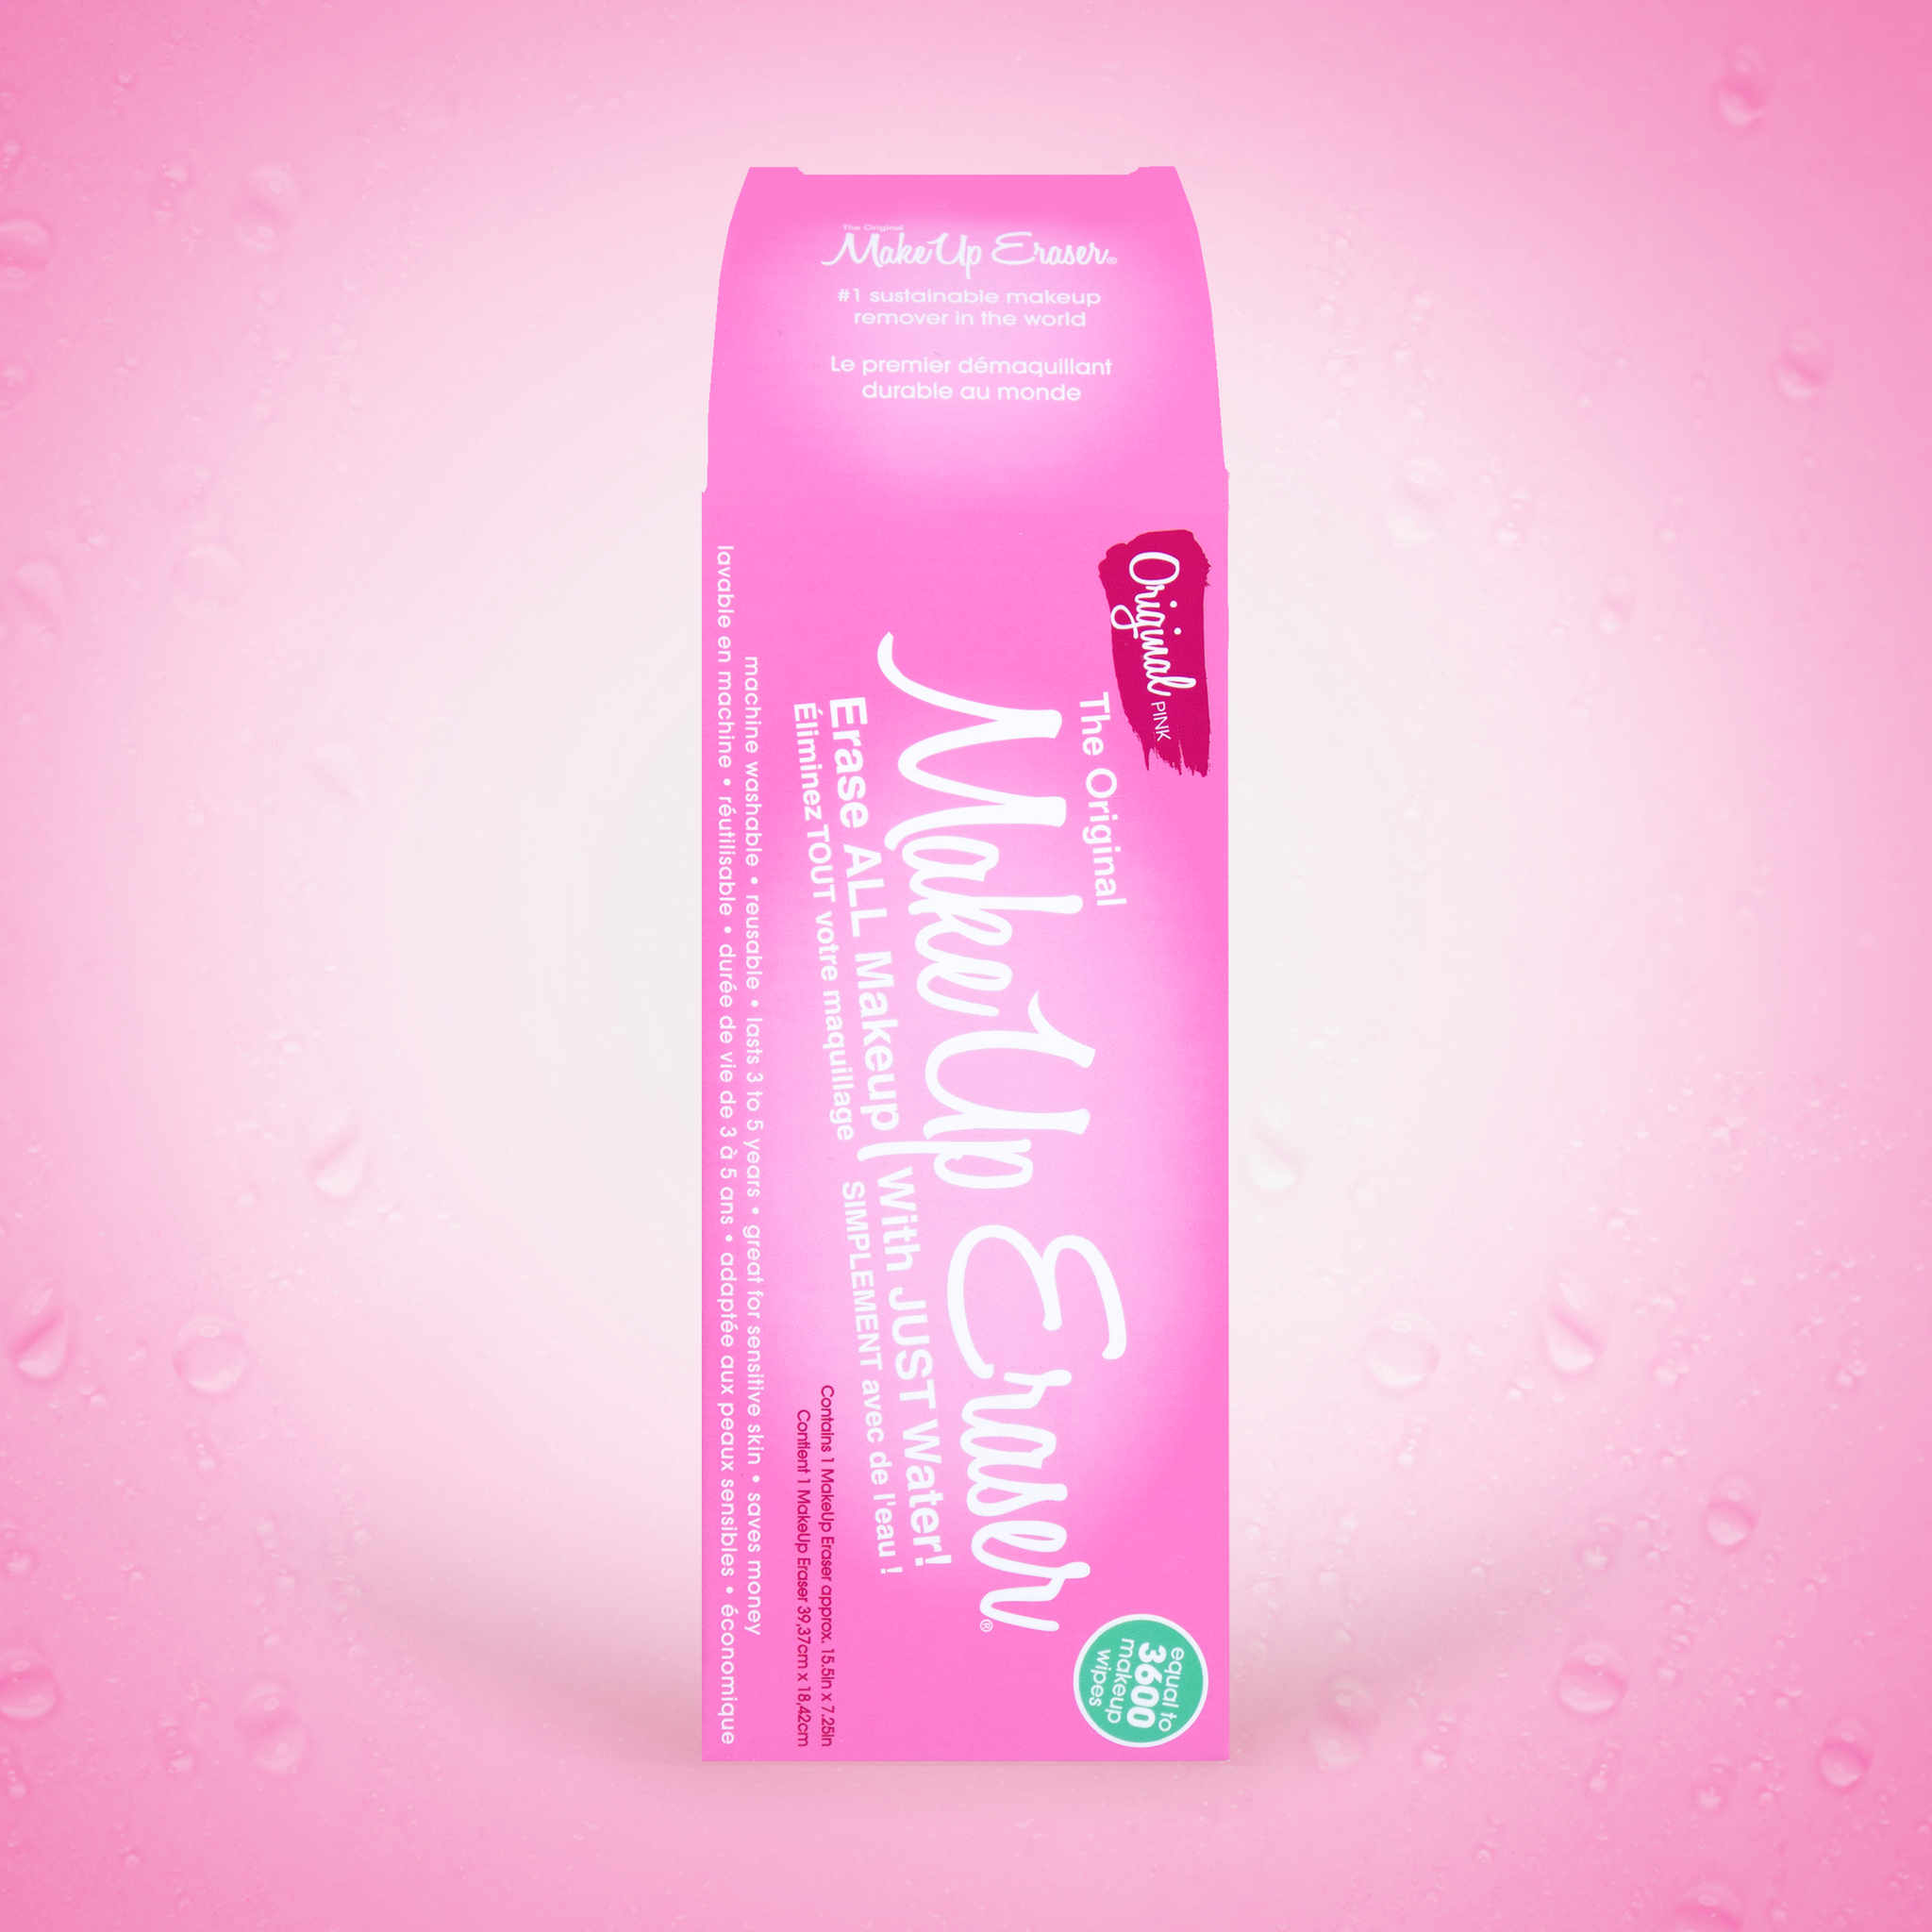 MakeUp Eraser, Erase All Makeup With Just Water, Including Waterproof Mascara, Eyeliner, Foundation, Lipstick and More 1 Count (Pack of 1) Original Pink